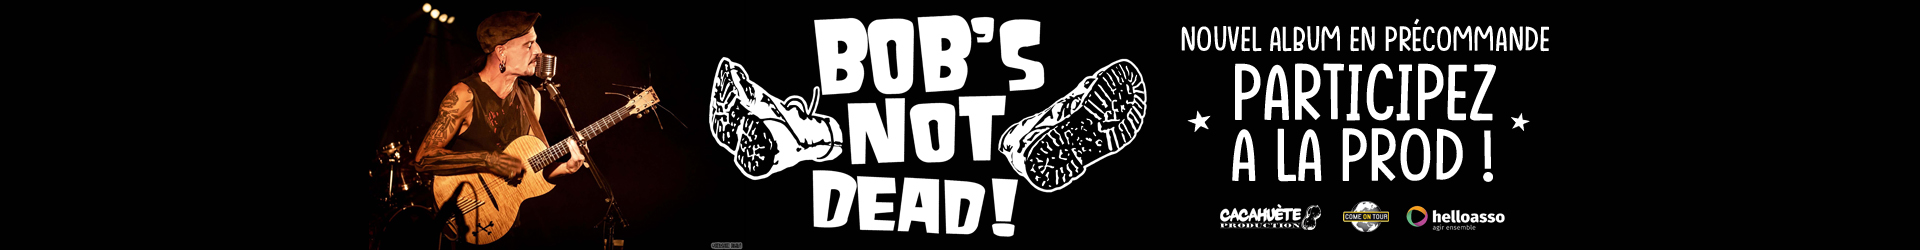 Bob's not dead !